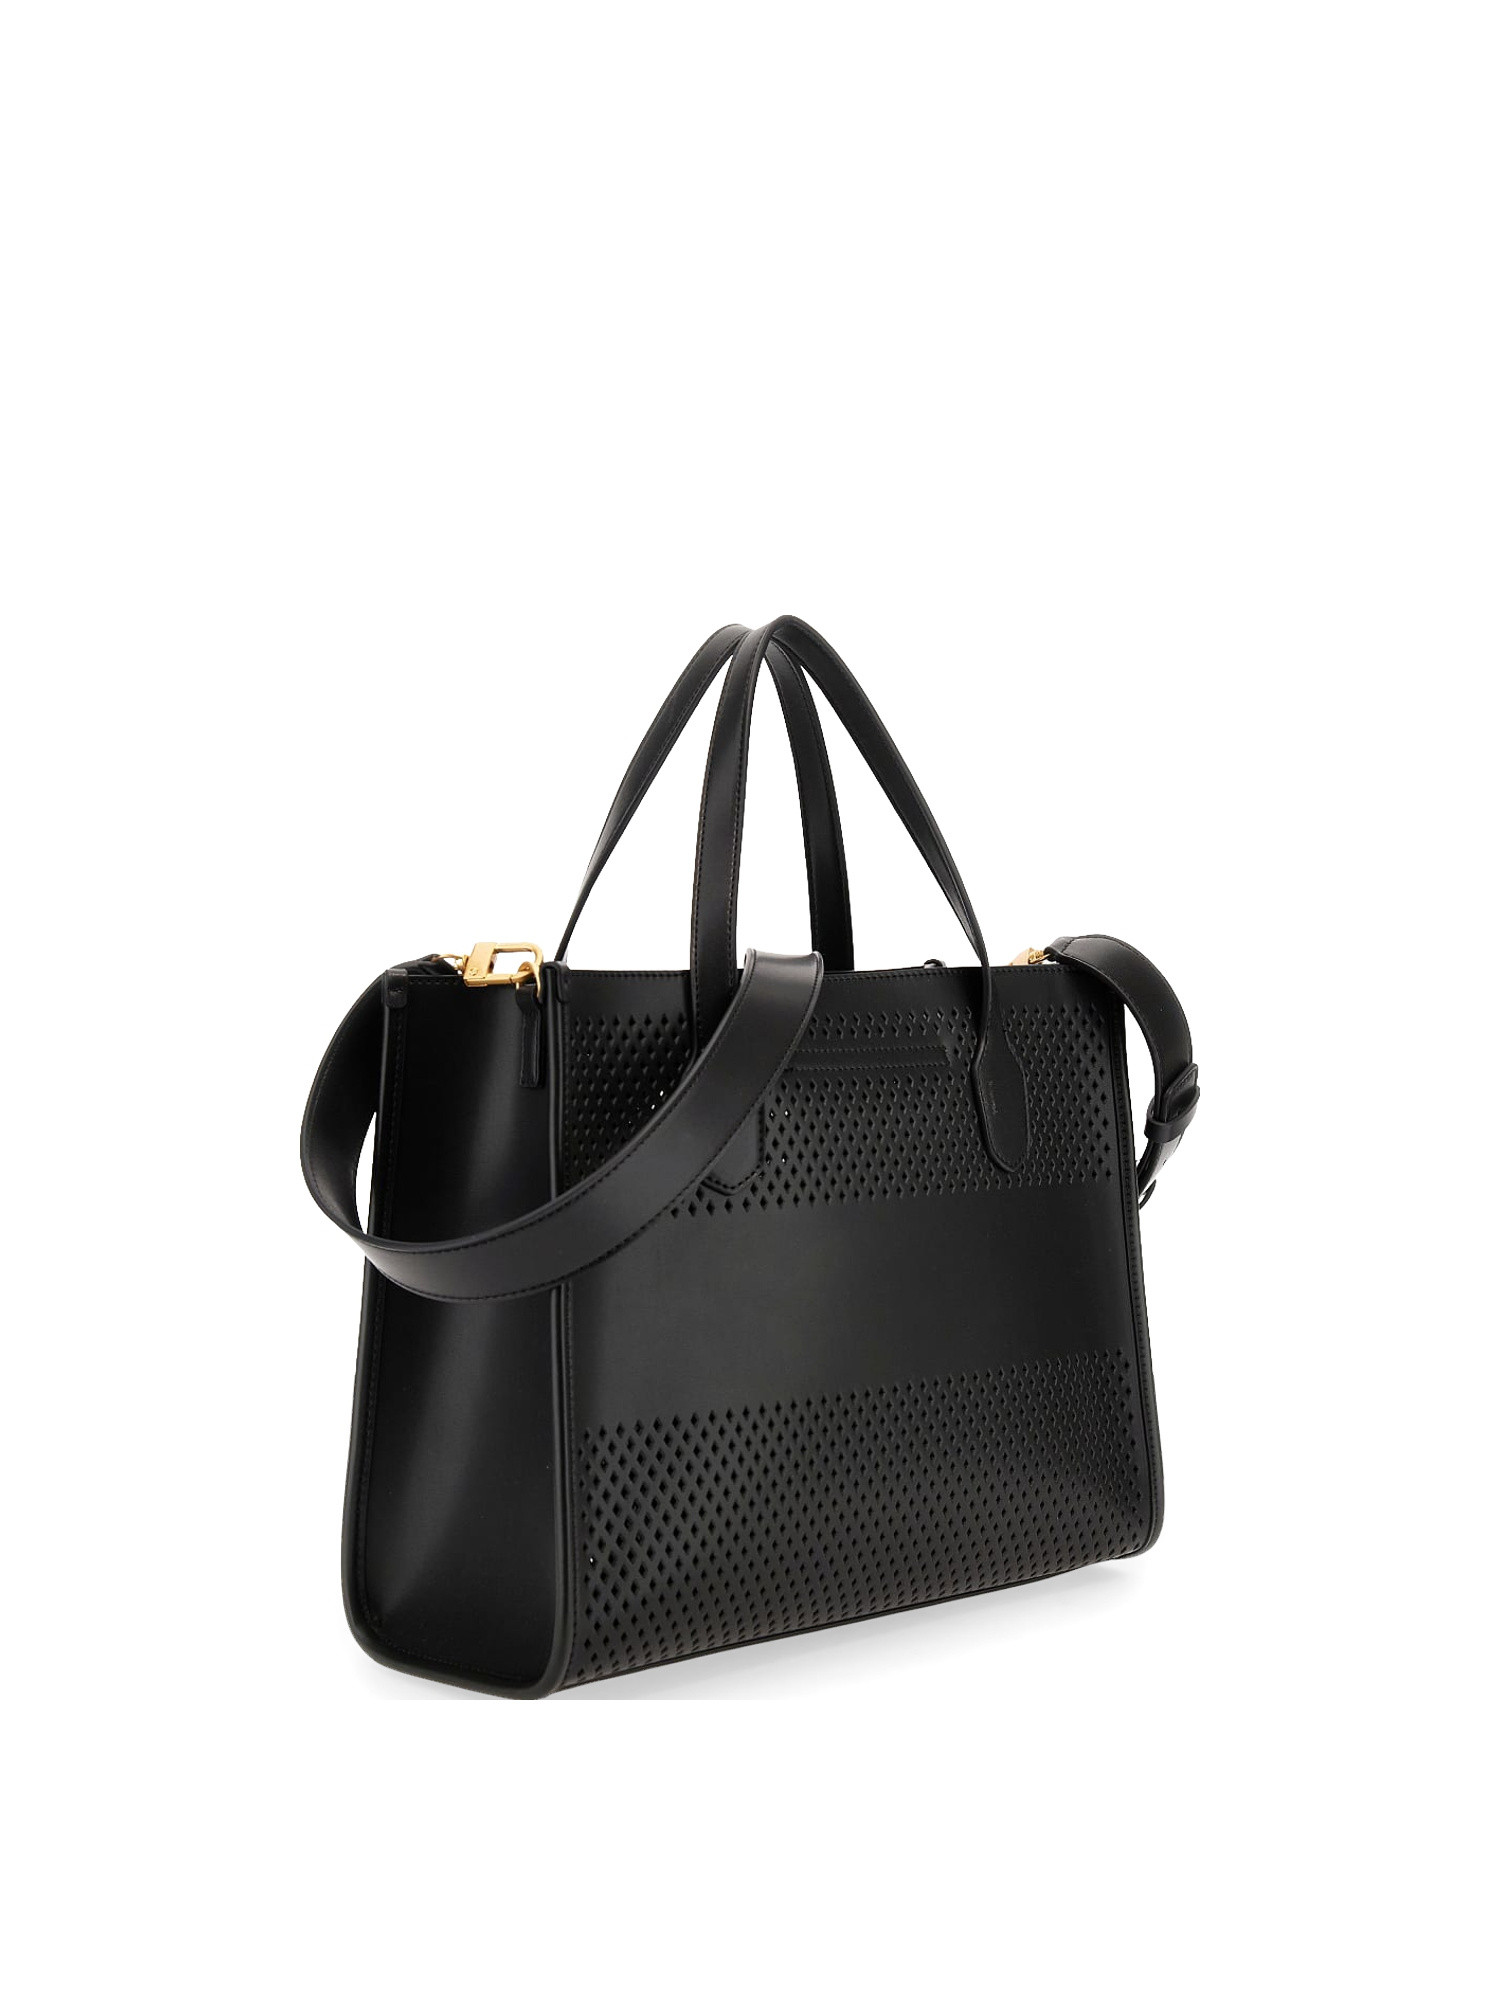 Guess - Katey perforated handbag, Black, large image number 1